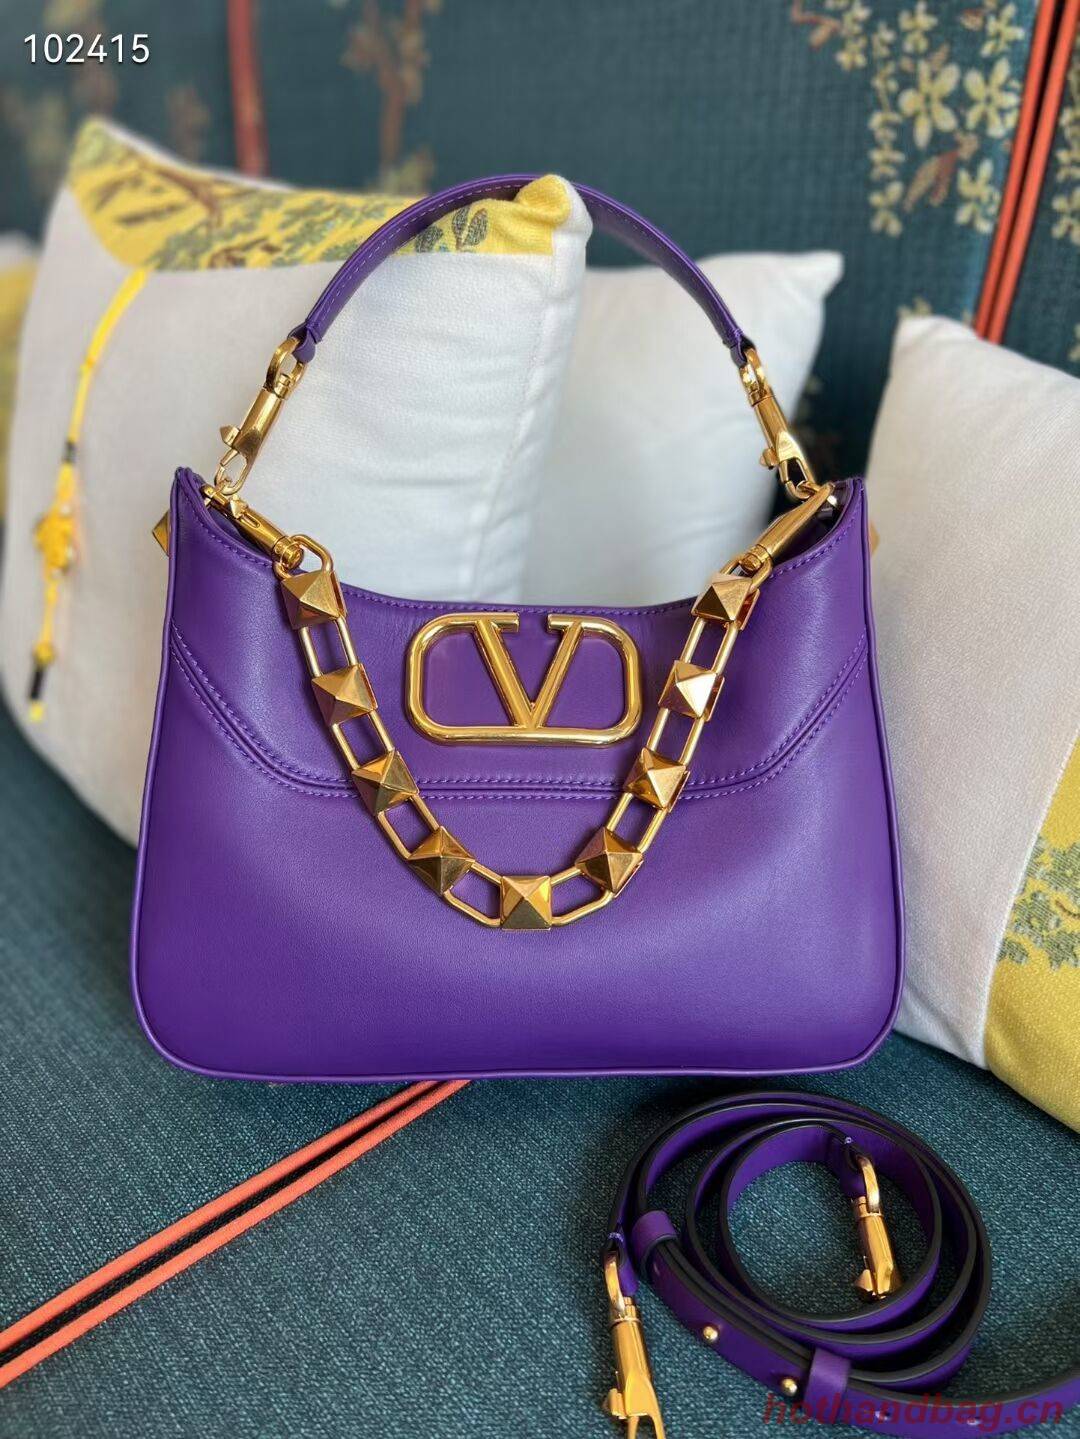 VALENTINO GARAVANI Loco Calf leather bag V2028 purple